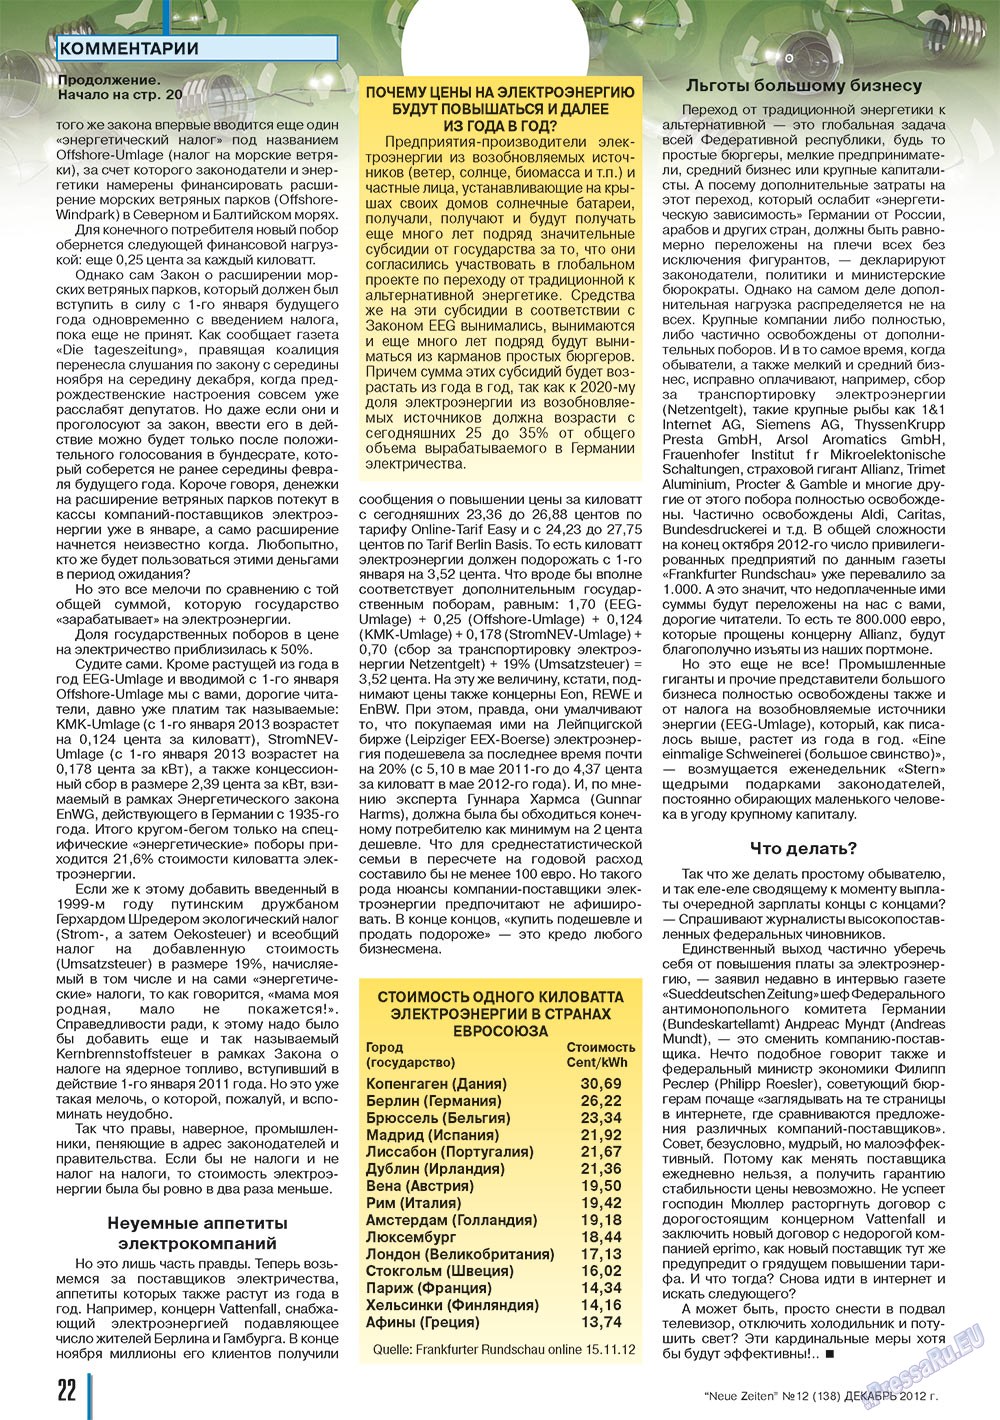 Neue Zeiten (журнал). 2012 год, номер 12, стр. 22